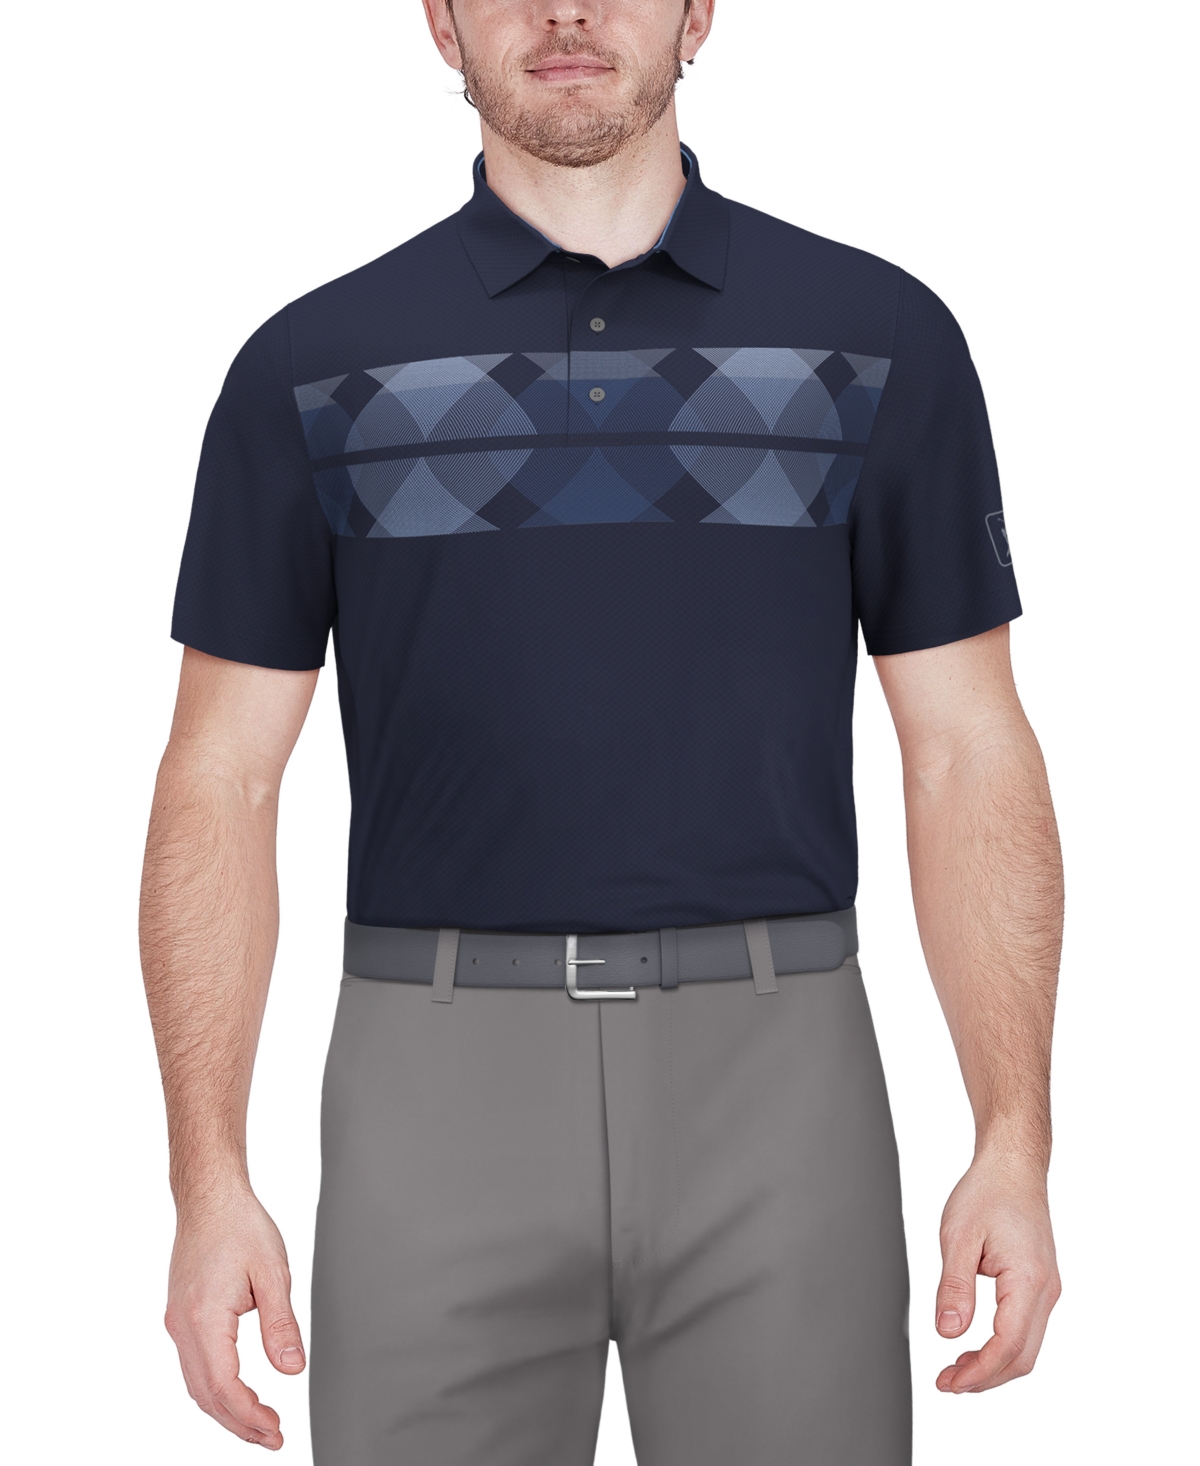 Men's Argyle Print Short Sleeve Golf Polo Shirt - Peacoat